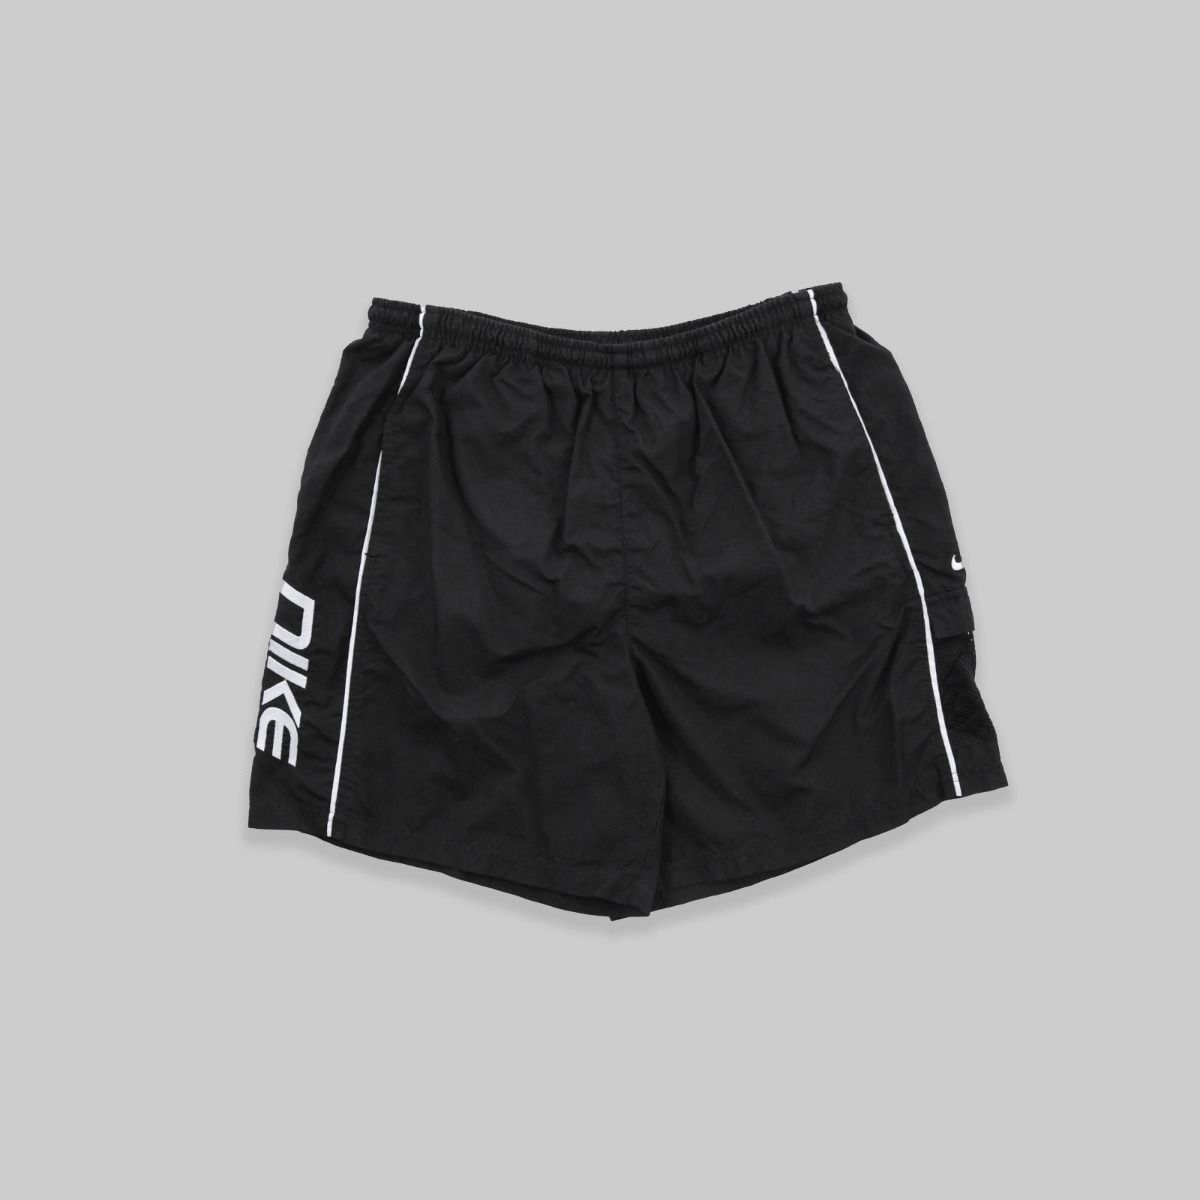 Nike Early 2000s Shorts